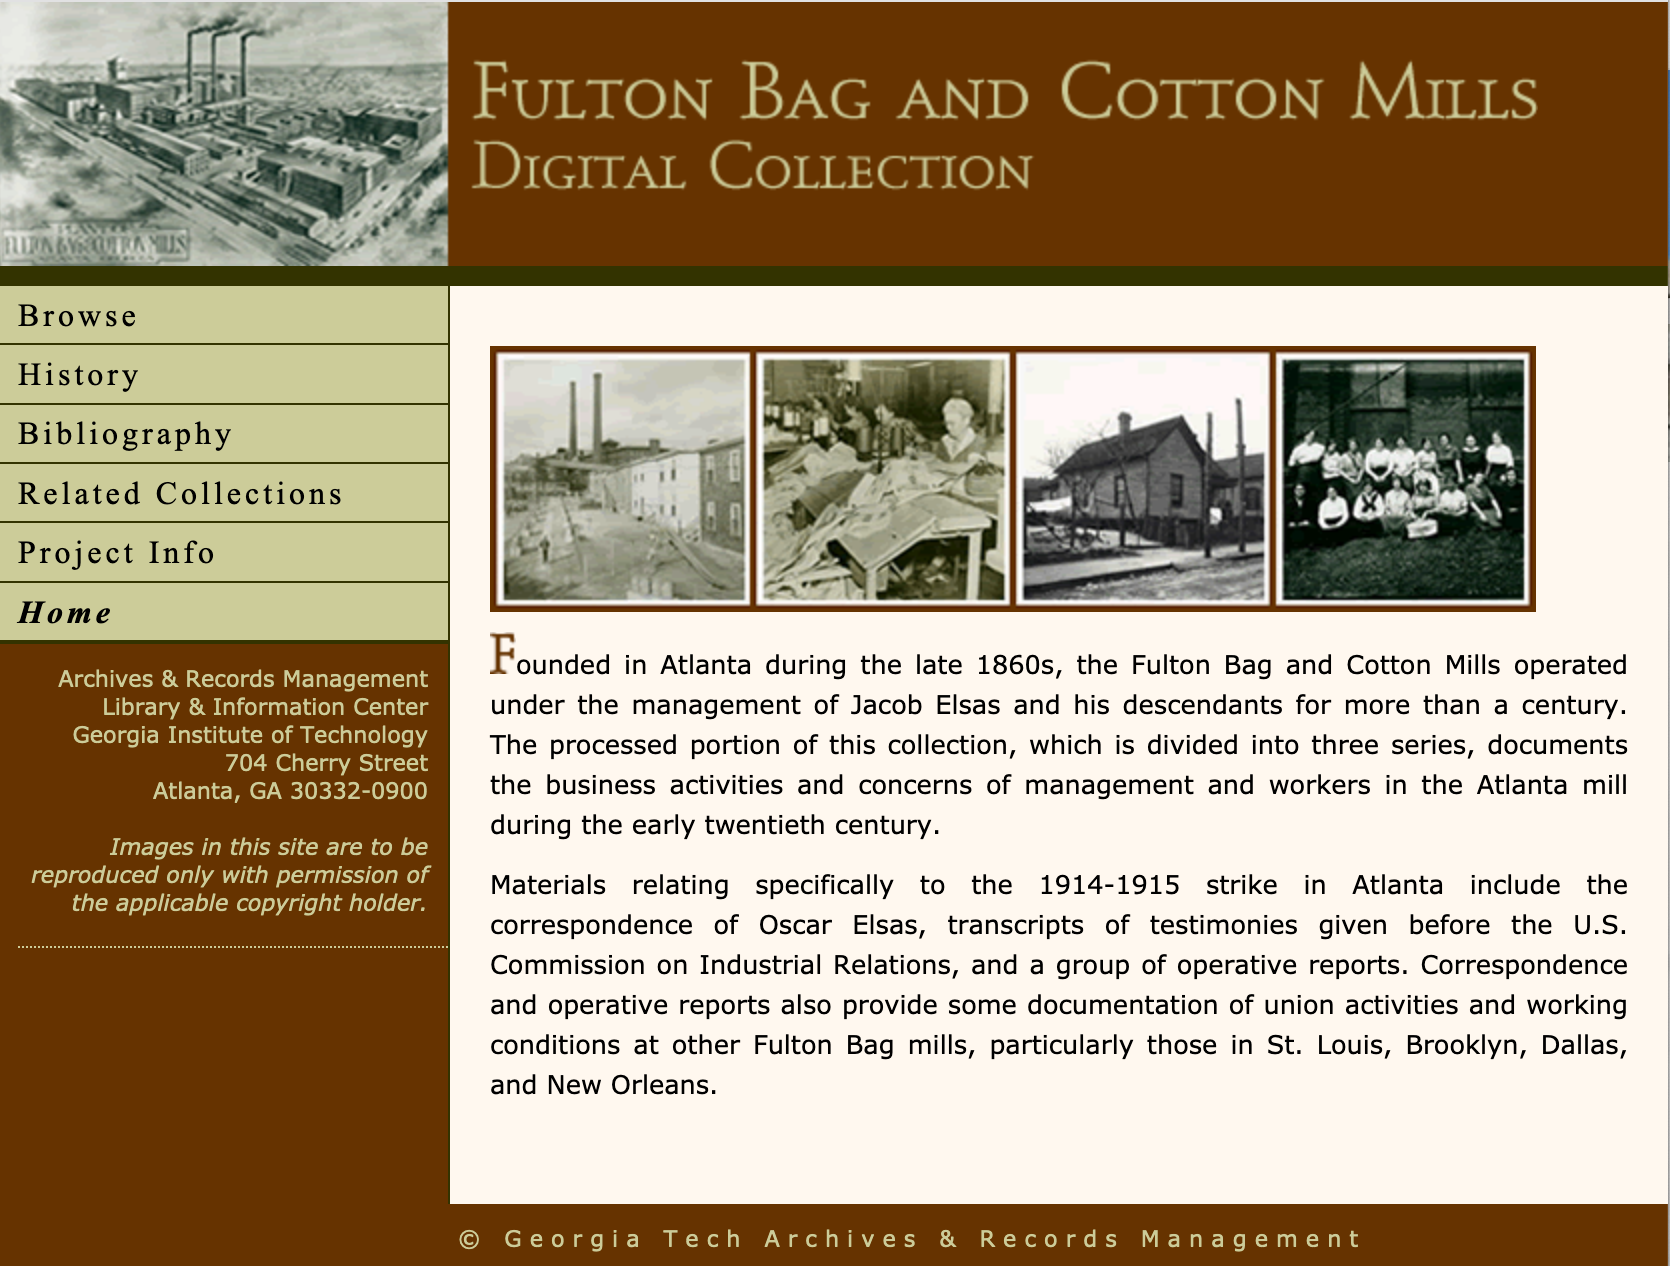 Fulton Bag and Cotton Mills